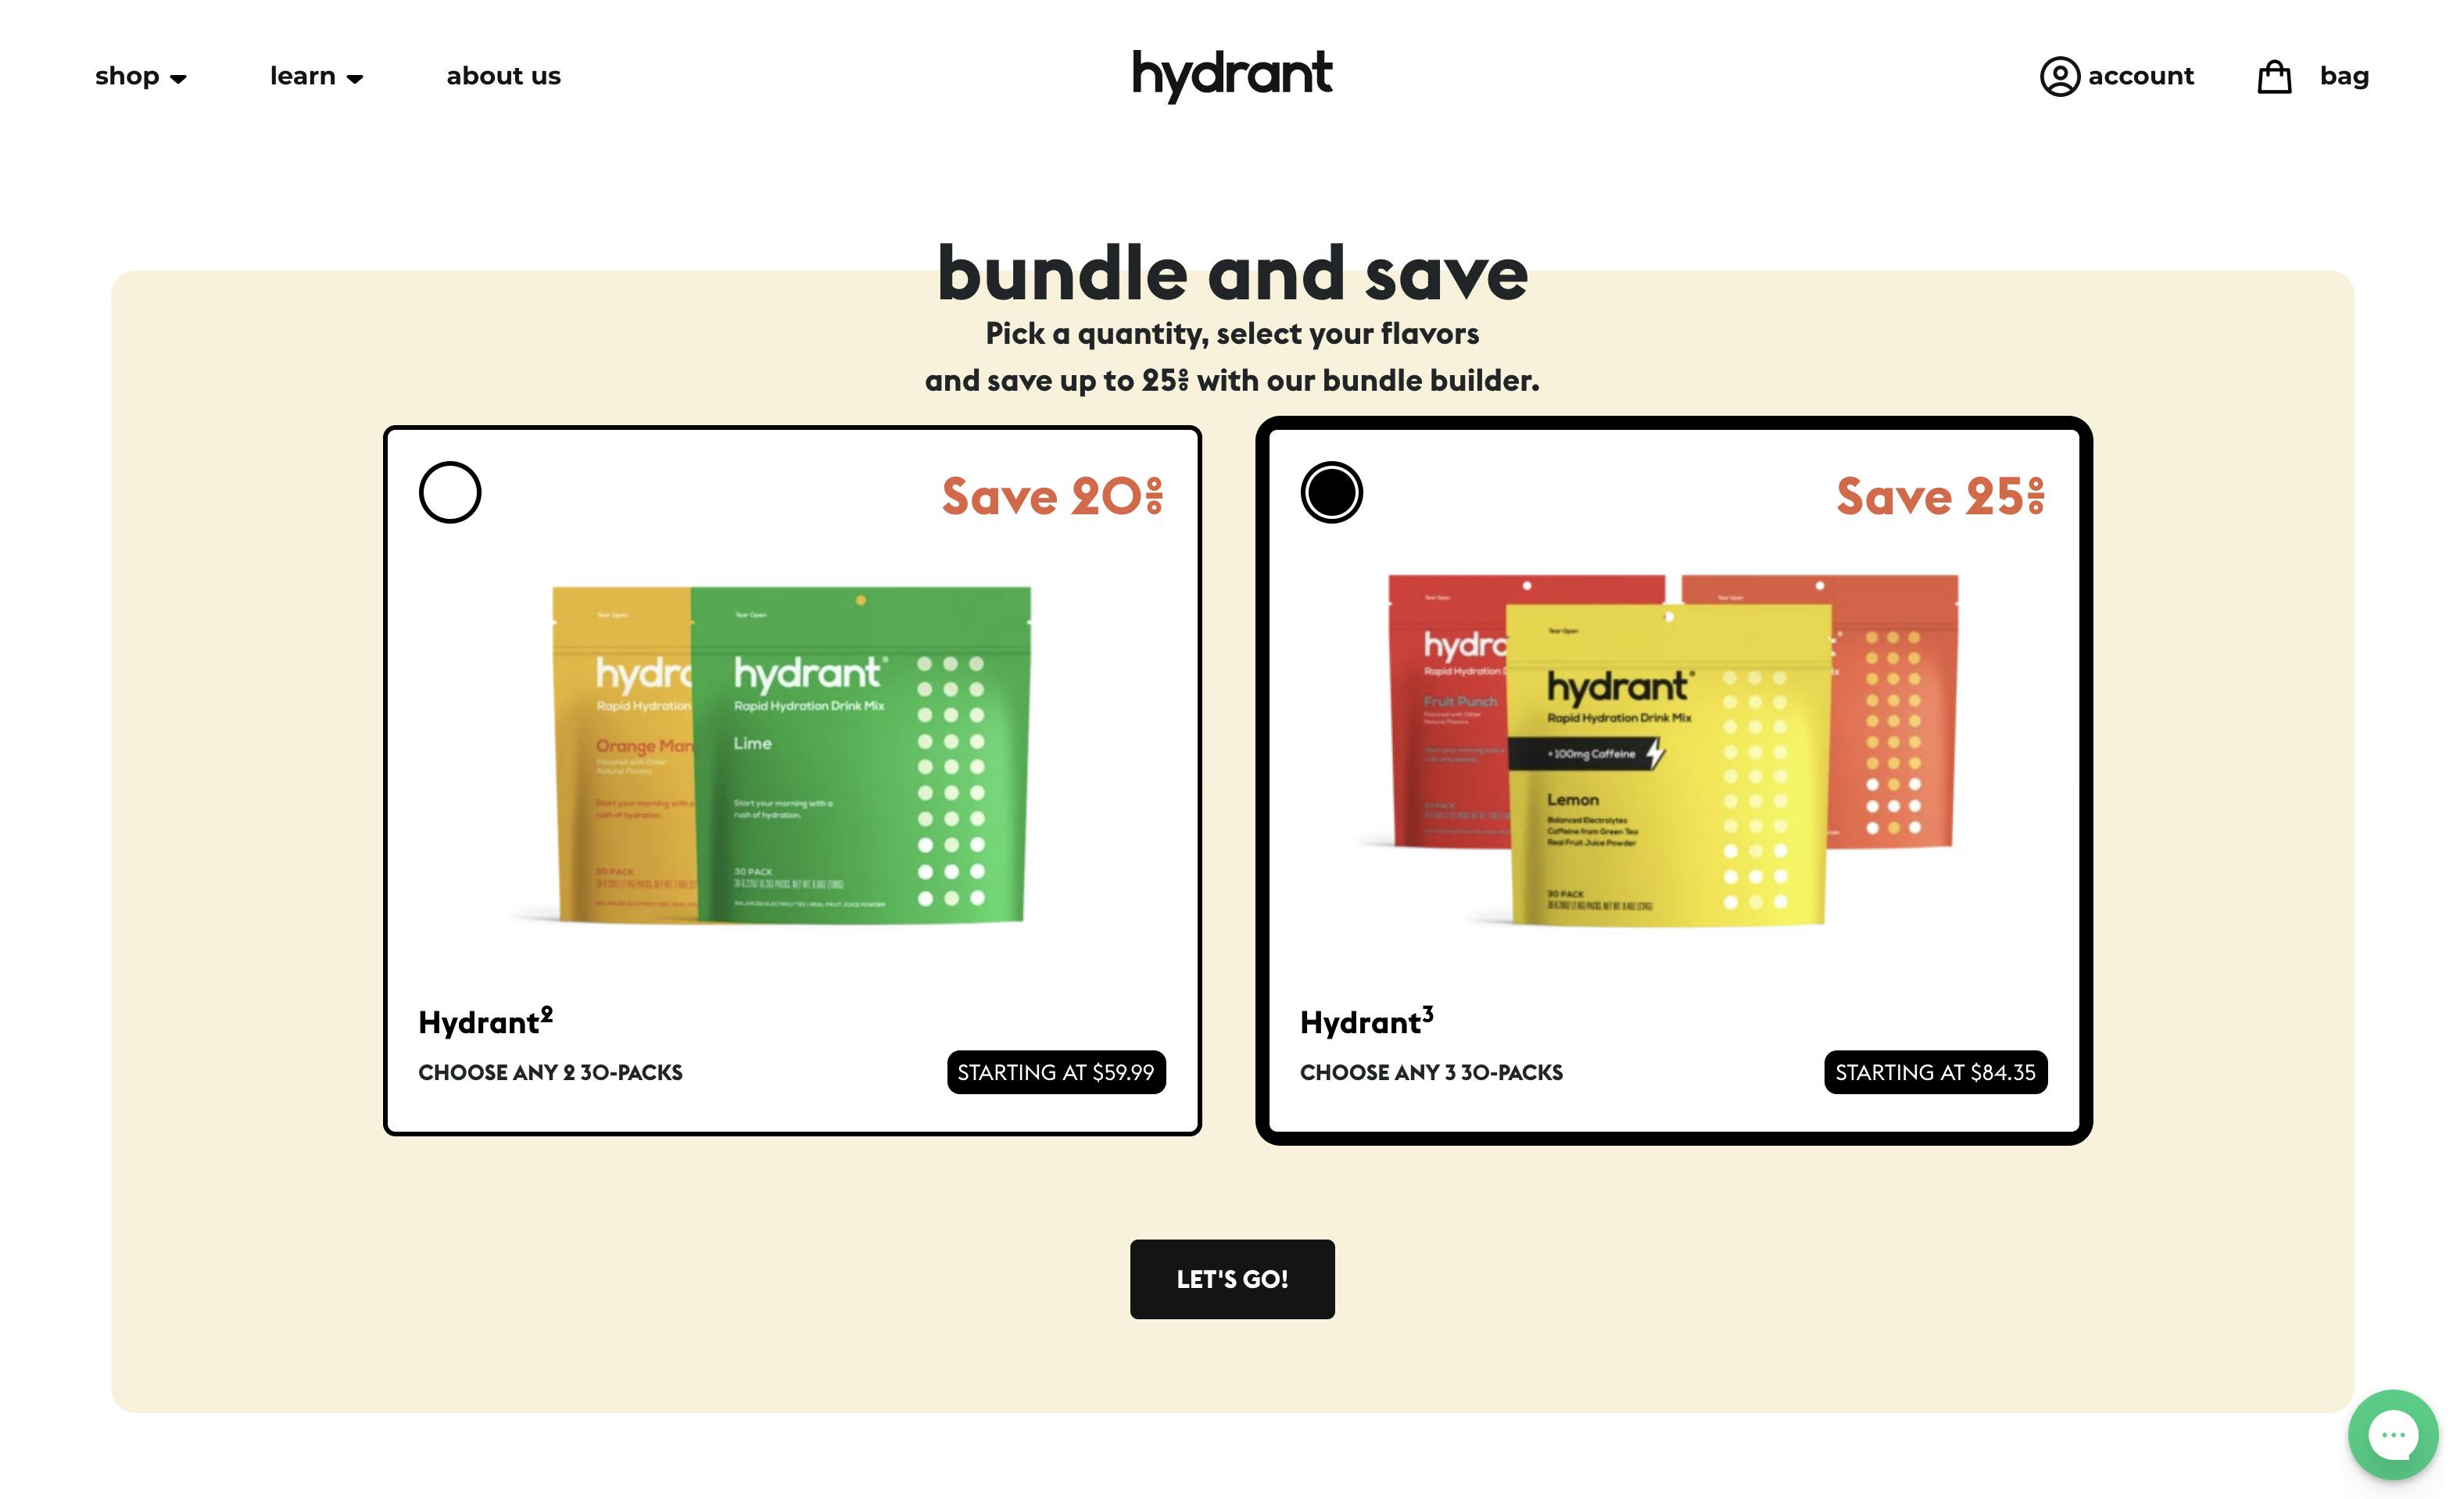 Hydrant bundles